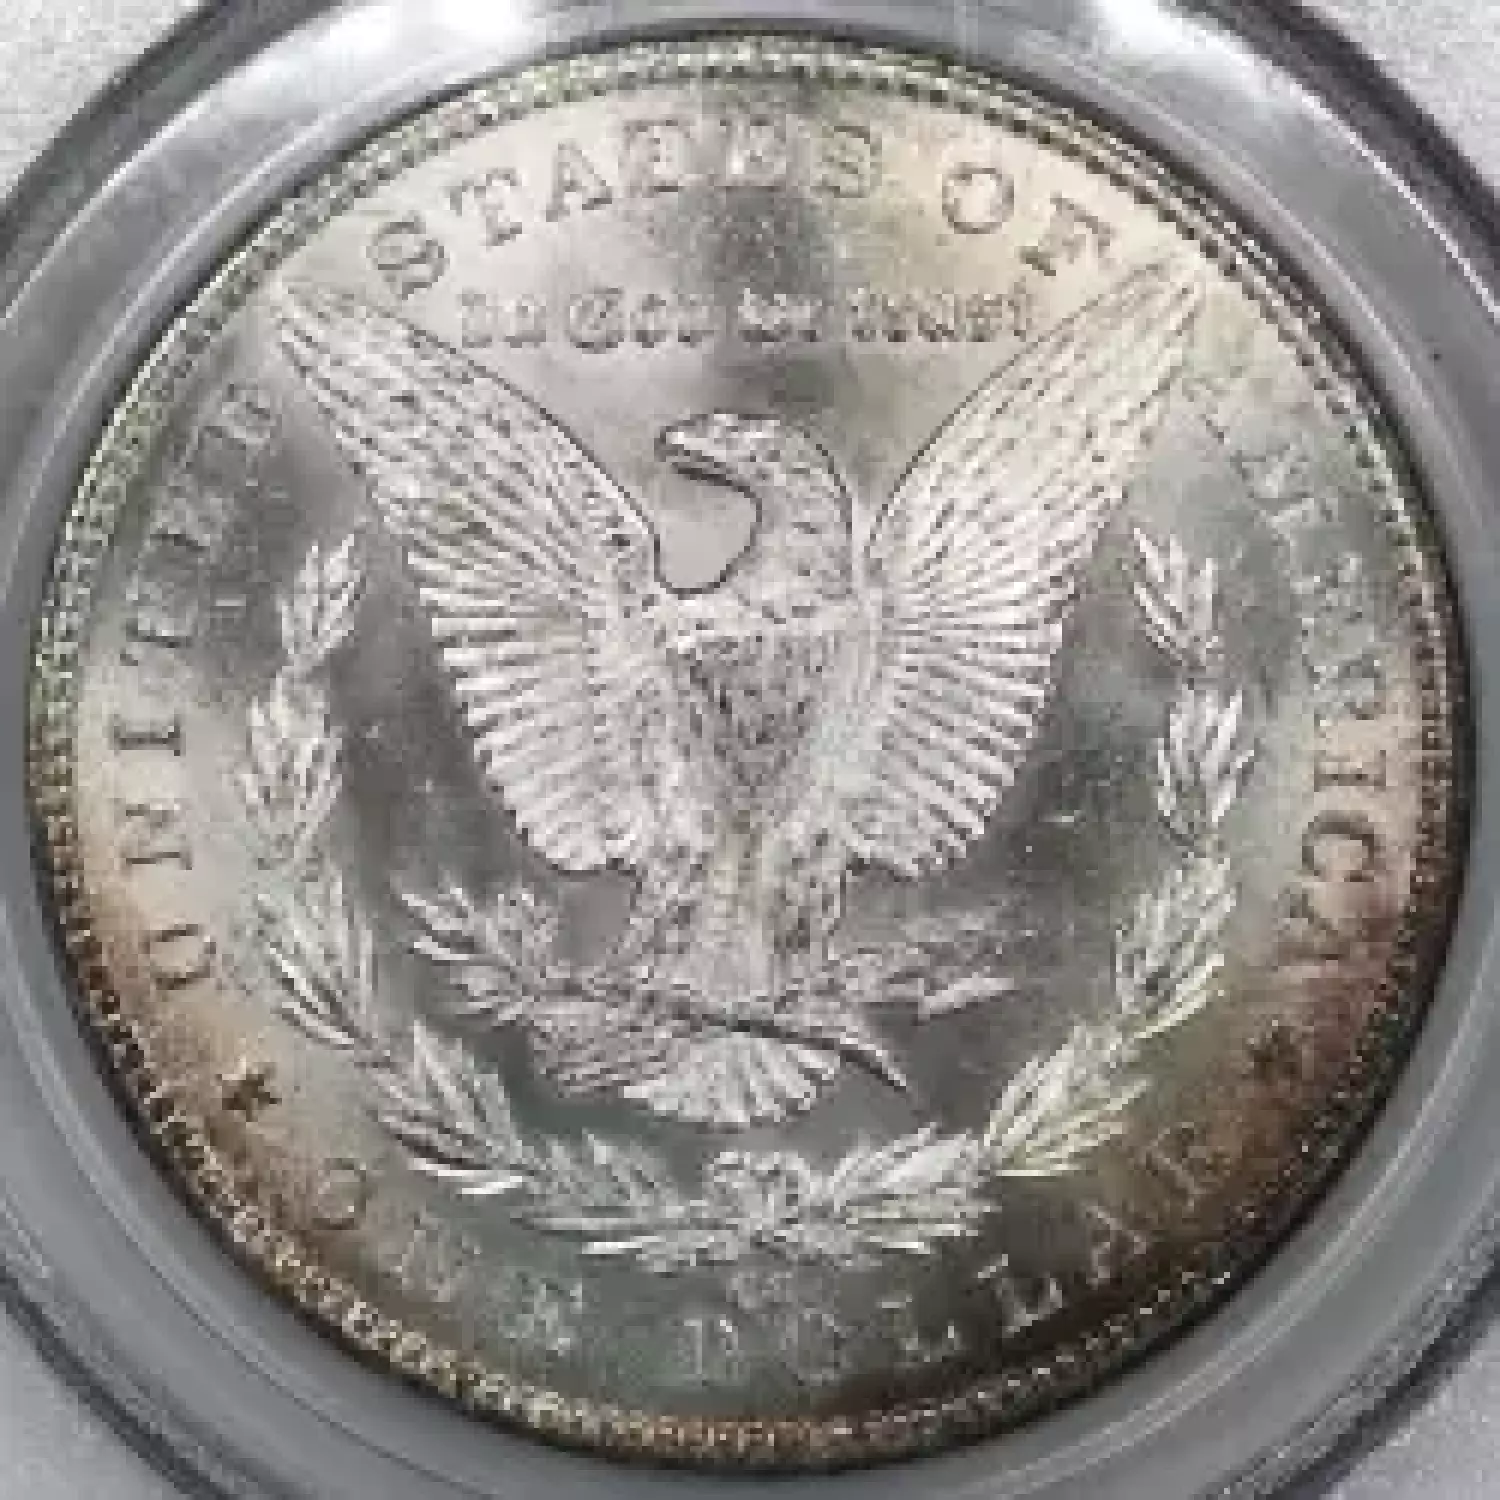 1884-CC $1 (4)